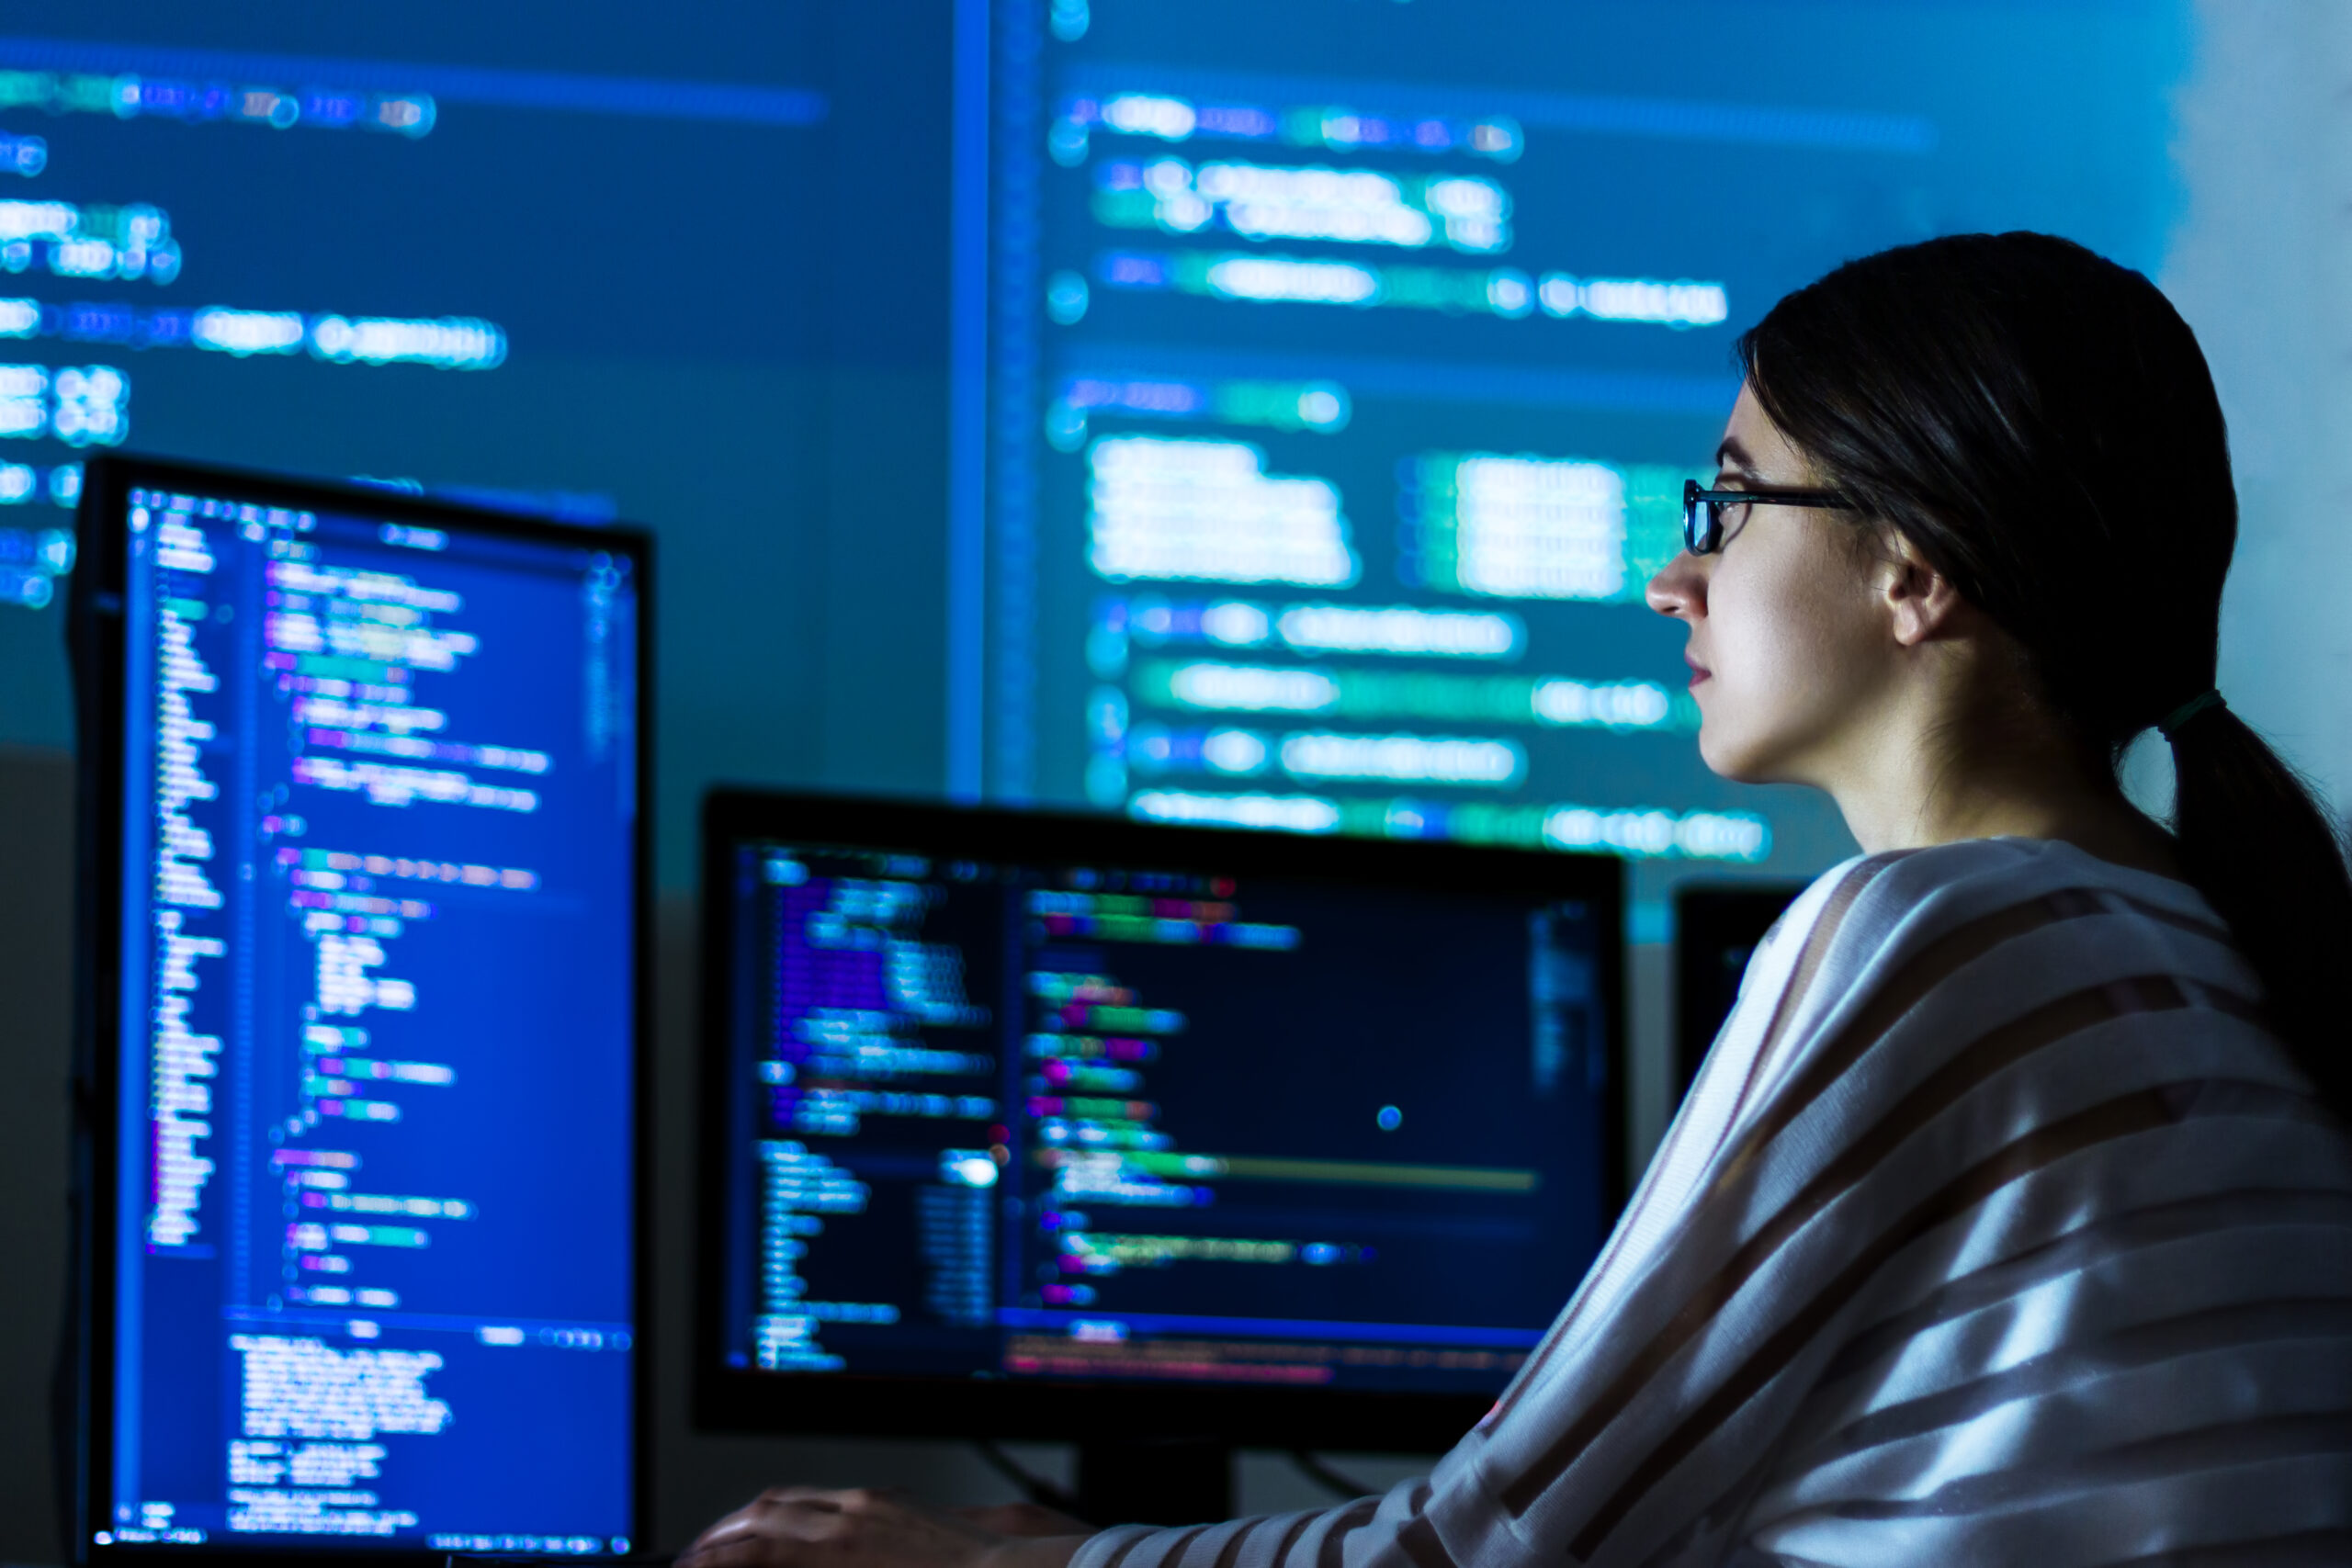 Software developer freelancer woman working at night